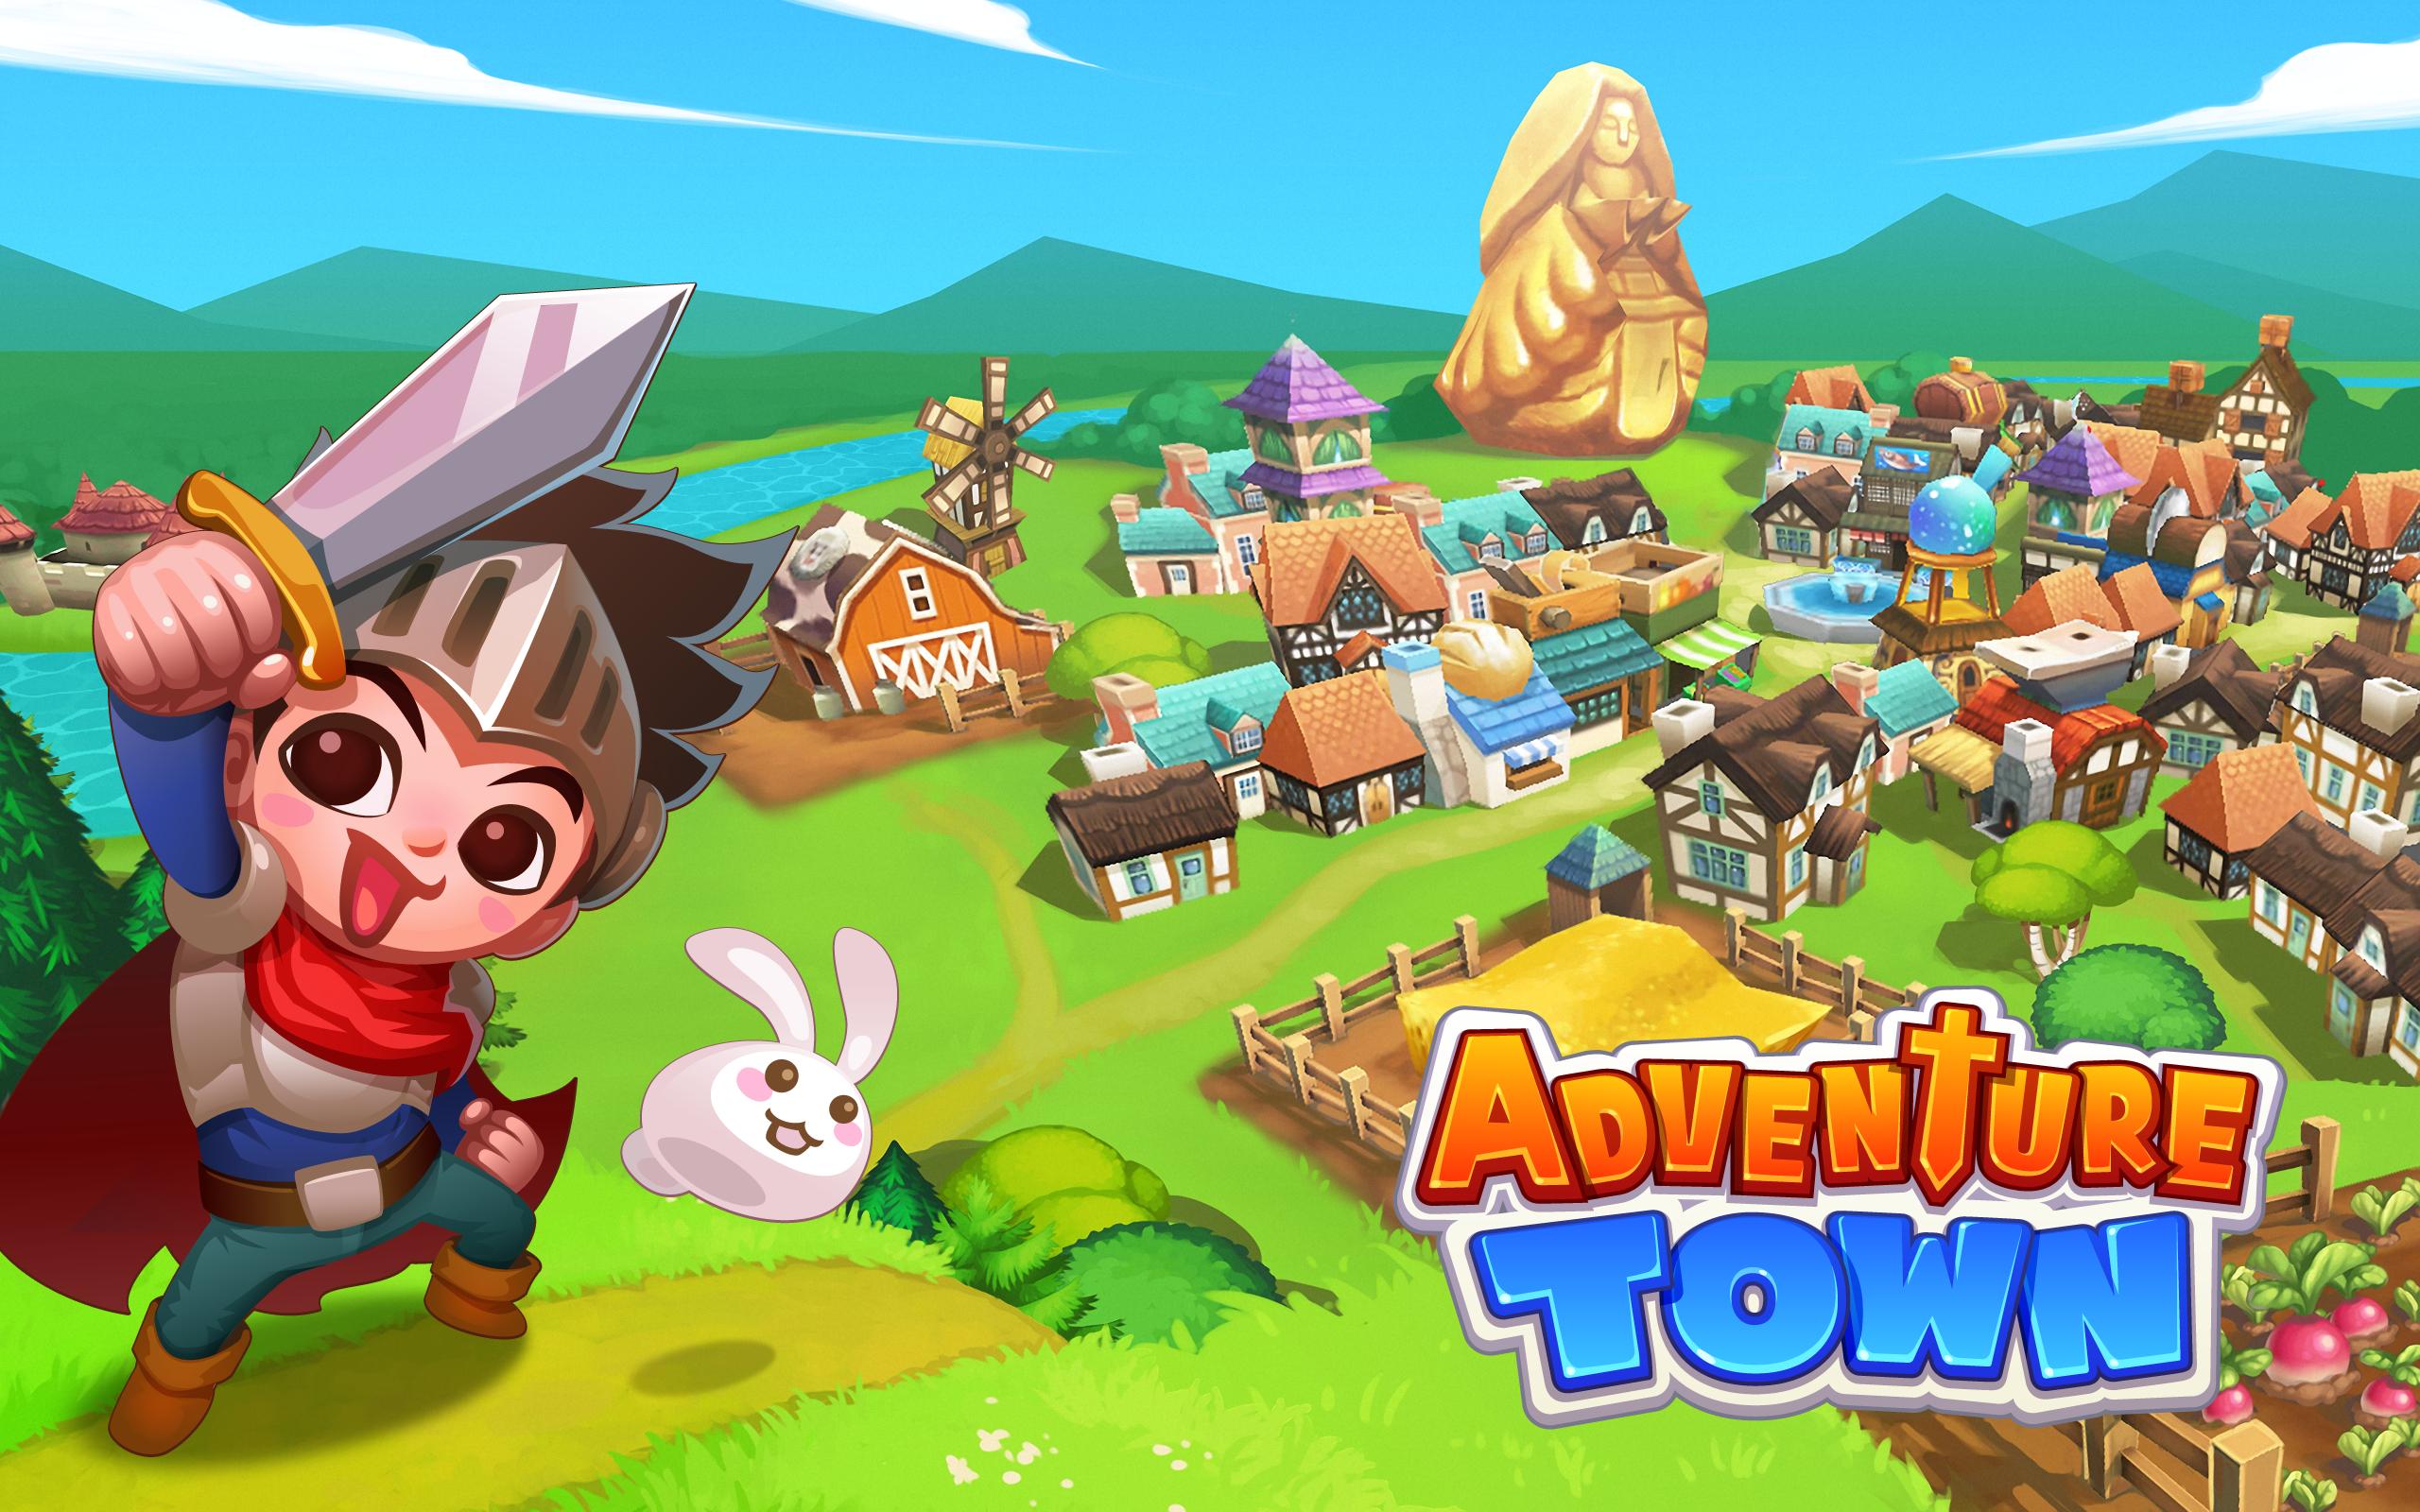 Adventures game download. Игры и приключения. Игра на андроид Adventure. Адвенчер игра. Town игра на андроид.